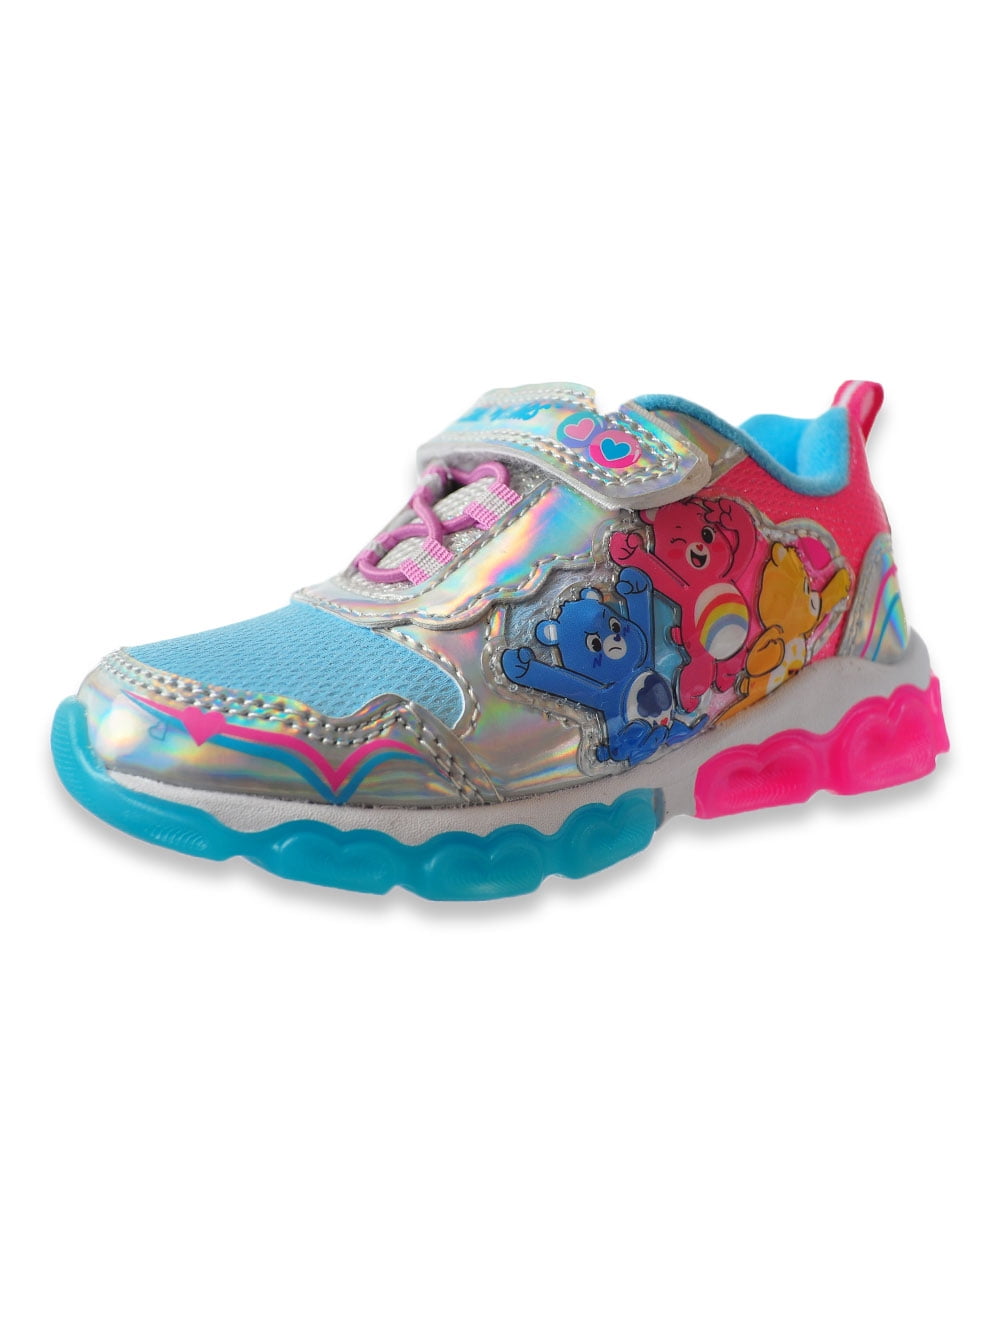 Nickelodeon Toddler Girl's Shimmer & Shine Shoes Light-Up Sizes:6,7 